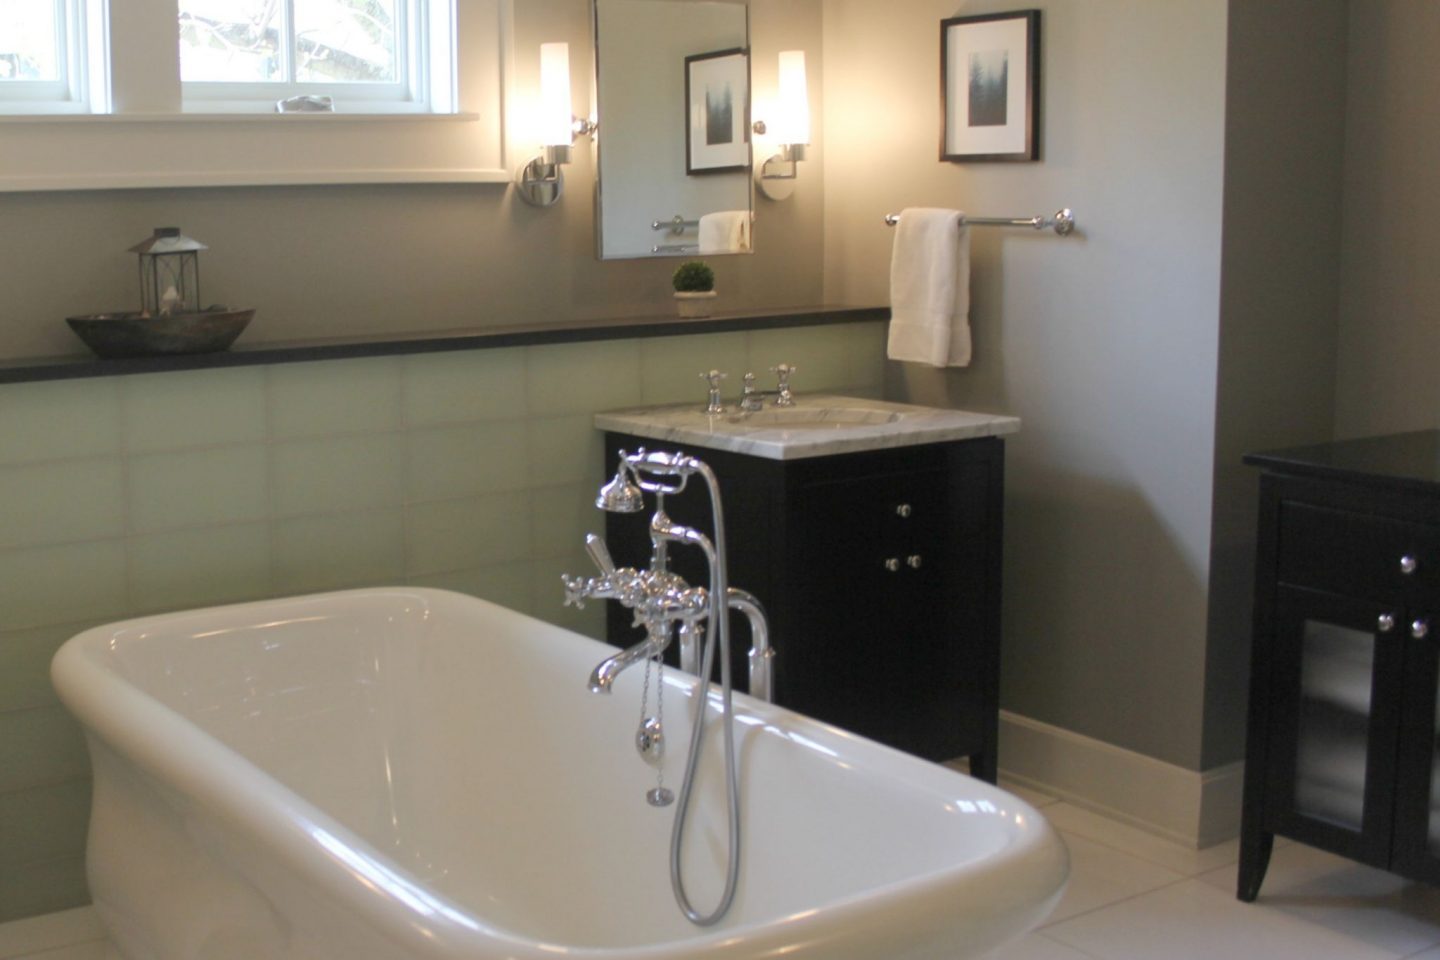 Luxurious bathtub in farmhouse bathroom. Modern Industrial Farmhouse Bedroom Design {2nd Floor Tour}. #modernfarmhouse #bedroom #industrialfarmhouse #greywalls #luxuriousfarmhouse #benjaminmooreplatinum #benjaminmoorestoningtongray